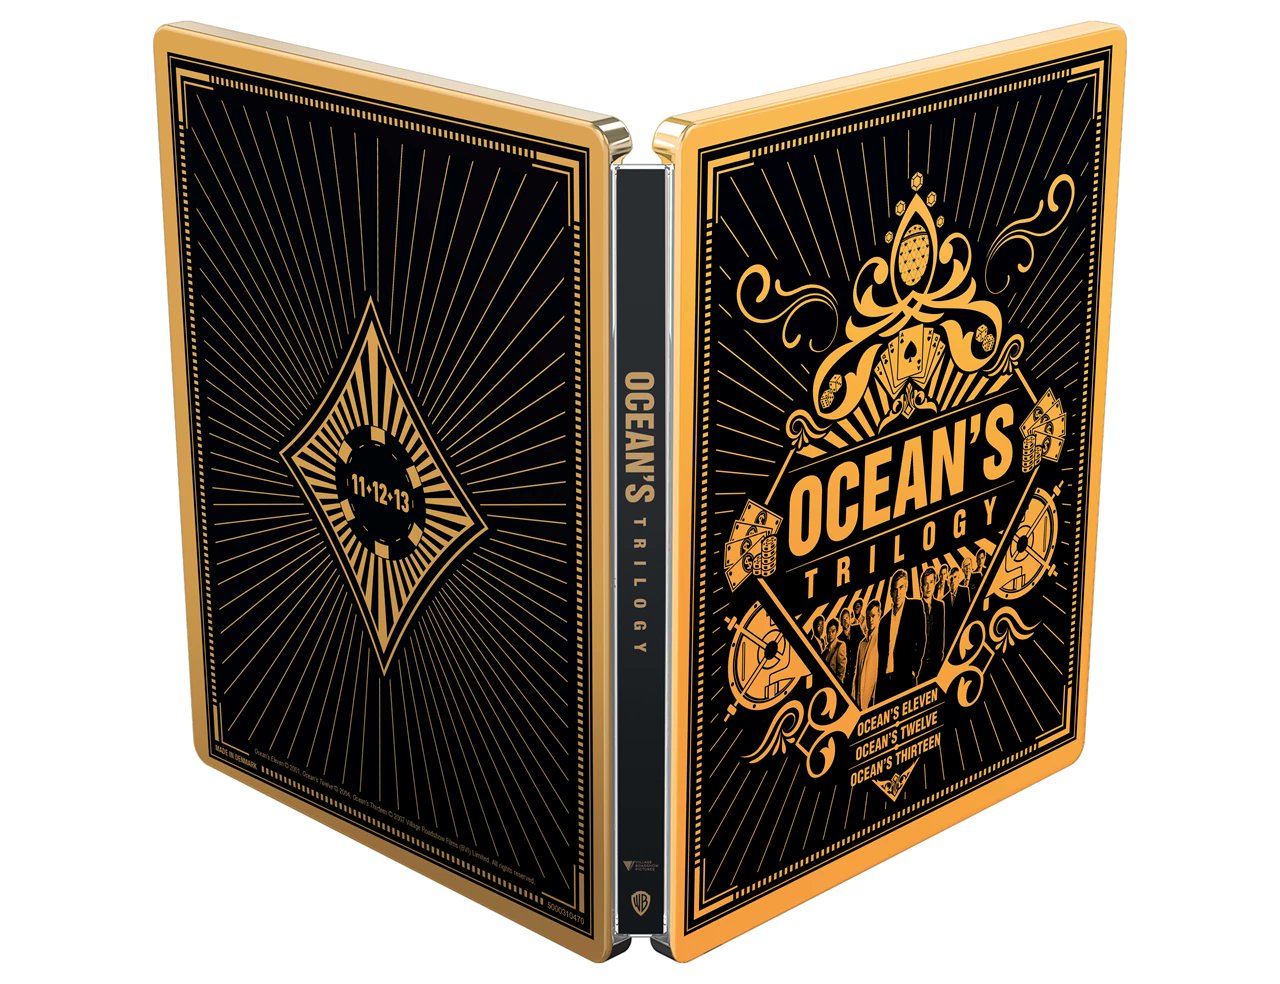 Trilogie Ocean's 11 + 12 + 13 | Steelbook 4K